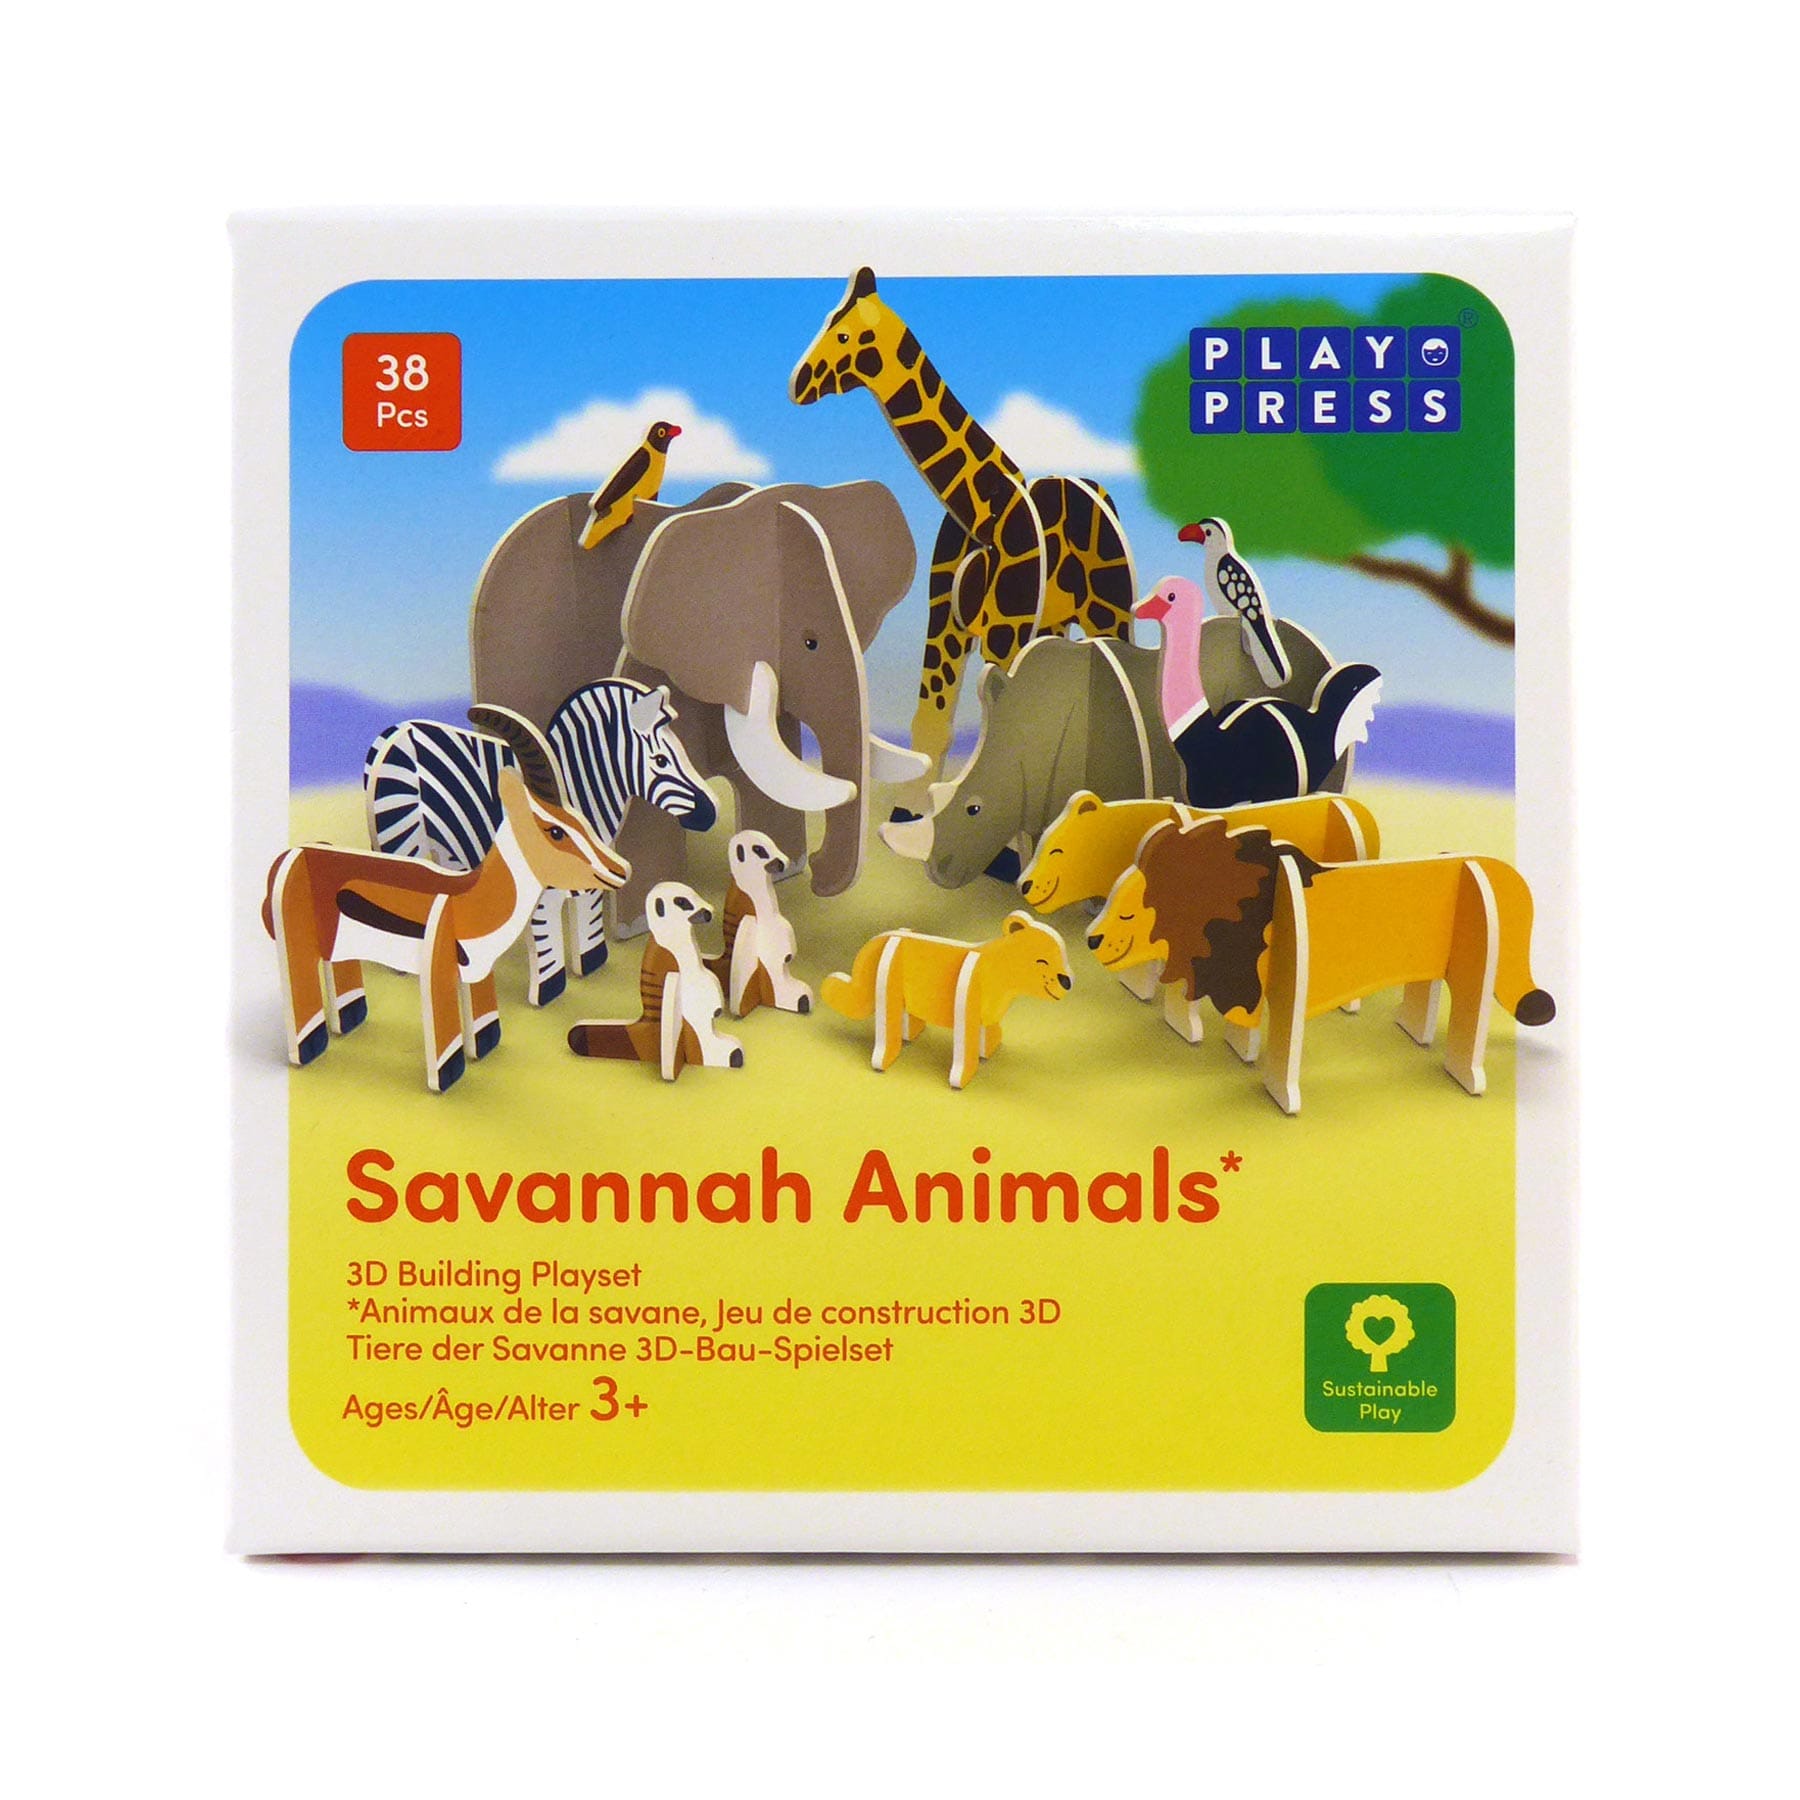 Savannah animals playset